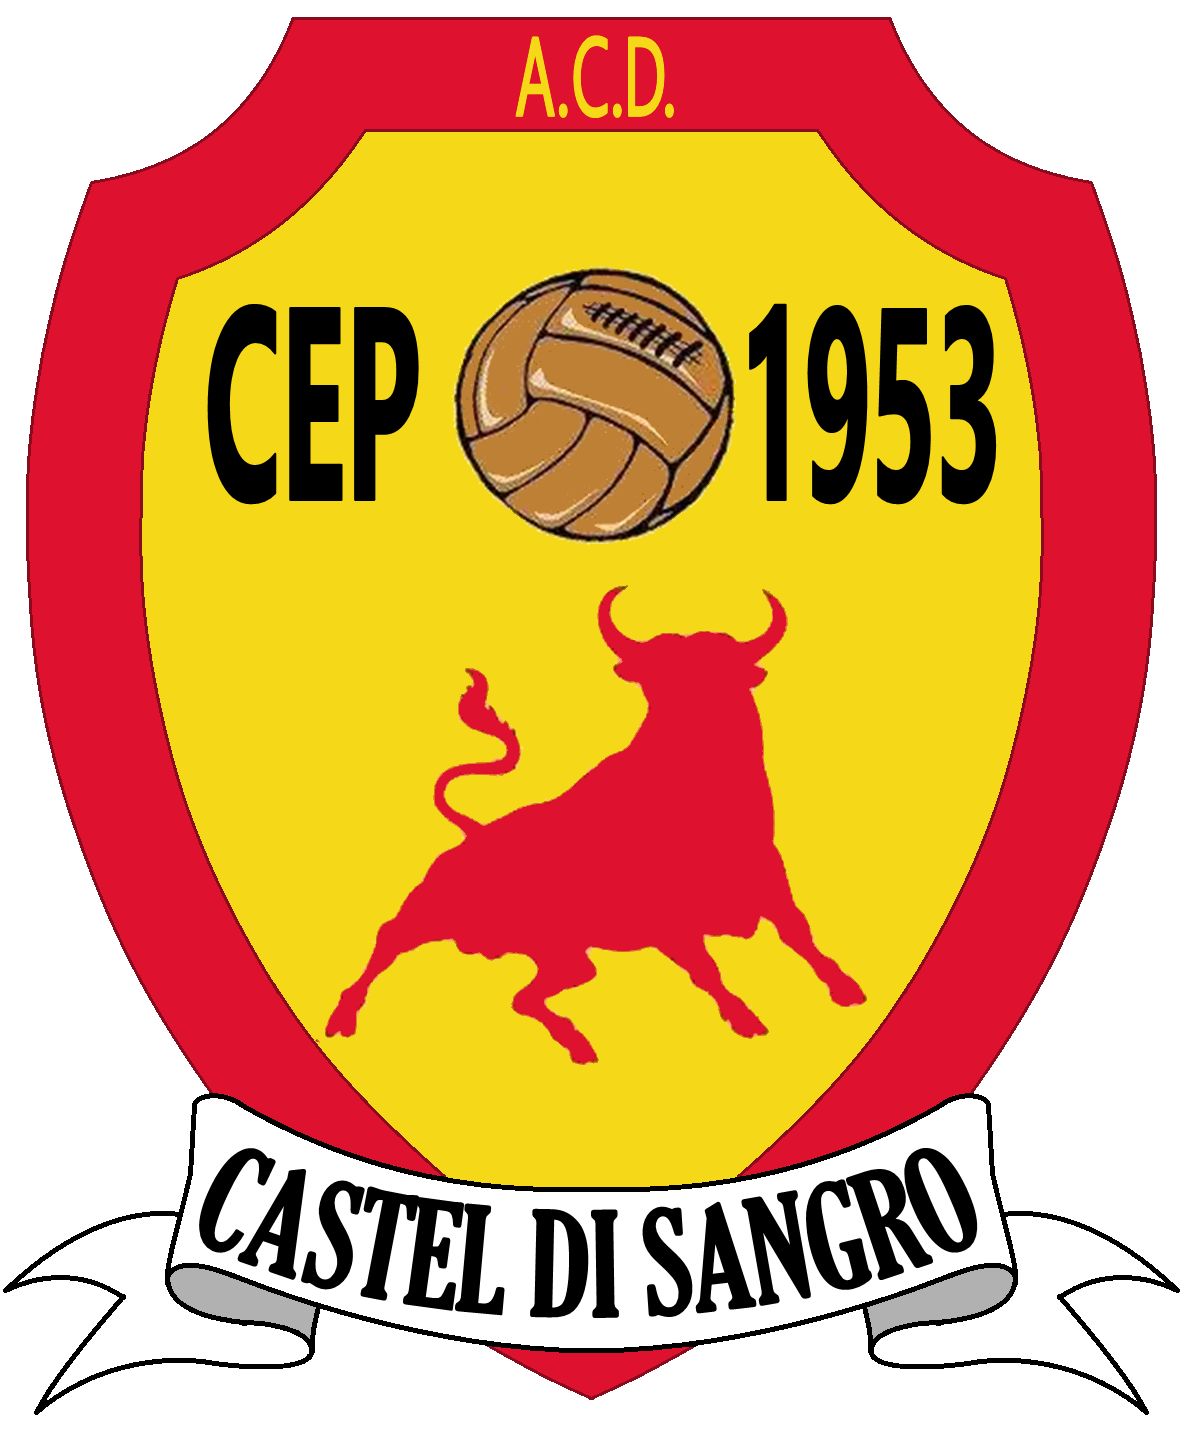 Wappen ACD Castel di Sangro Cep